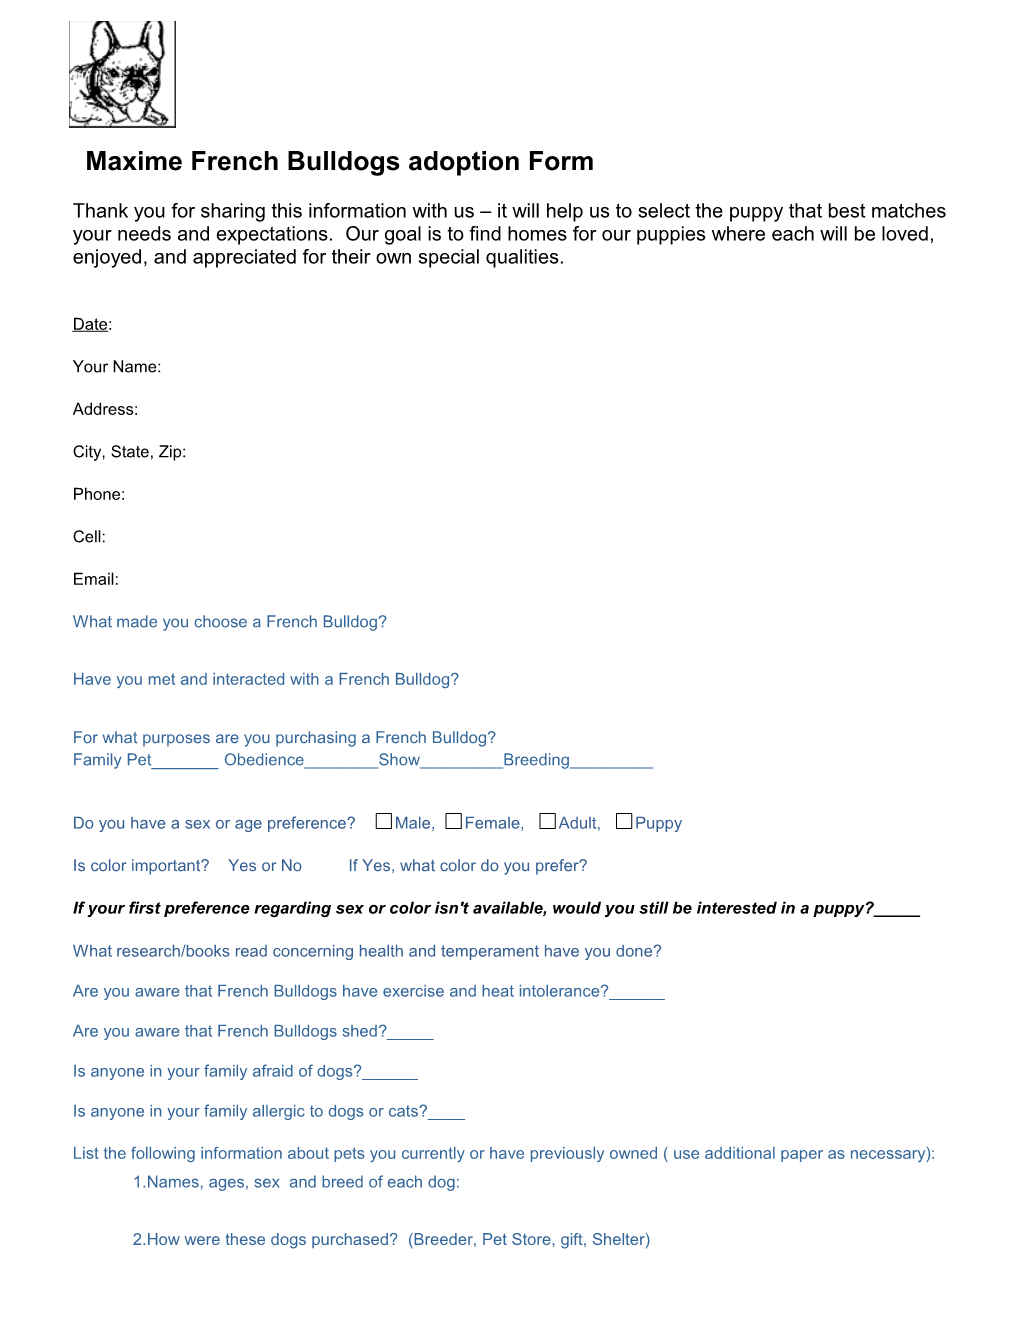 Maxime French Bulldog Adoption Form